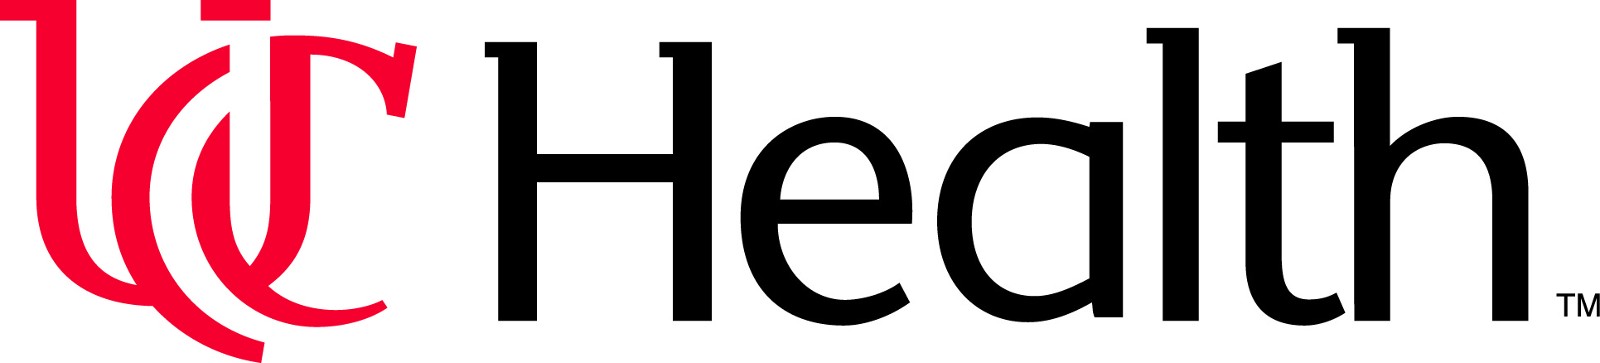 UC health logo